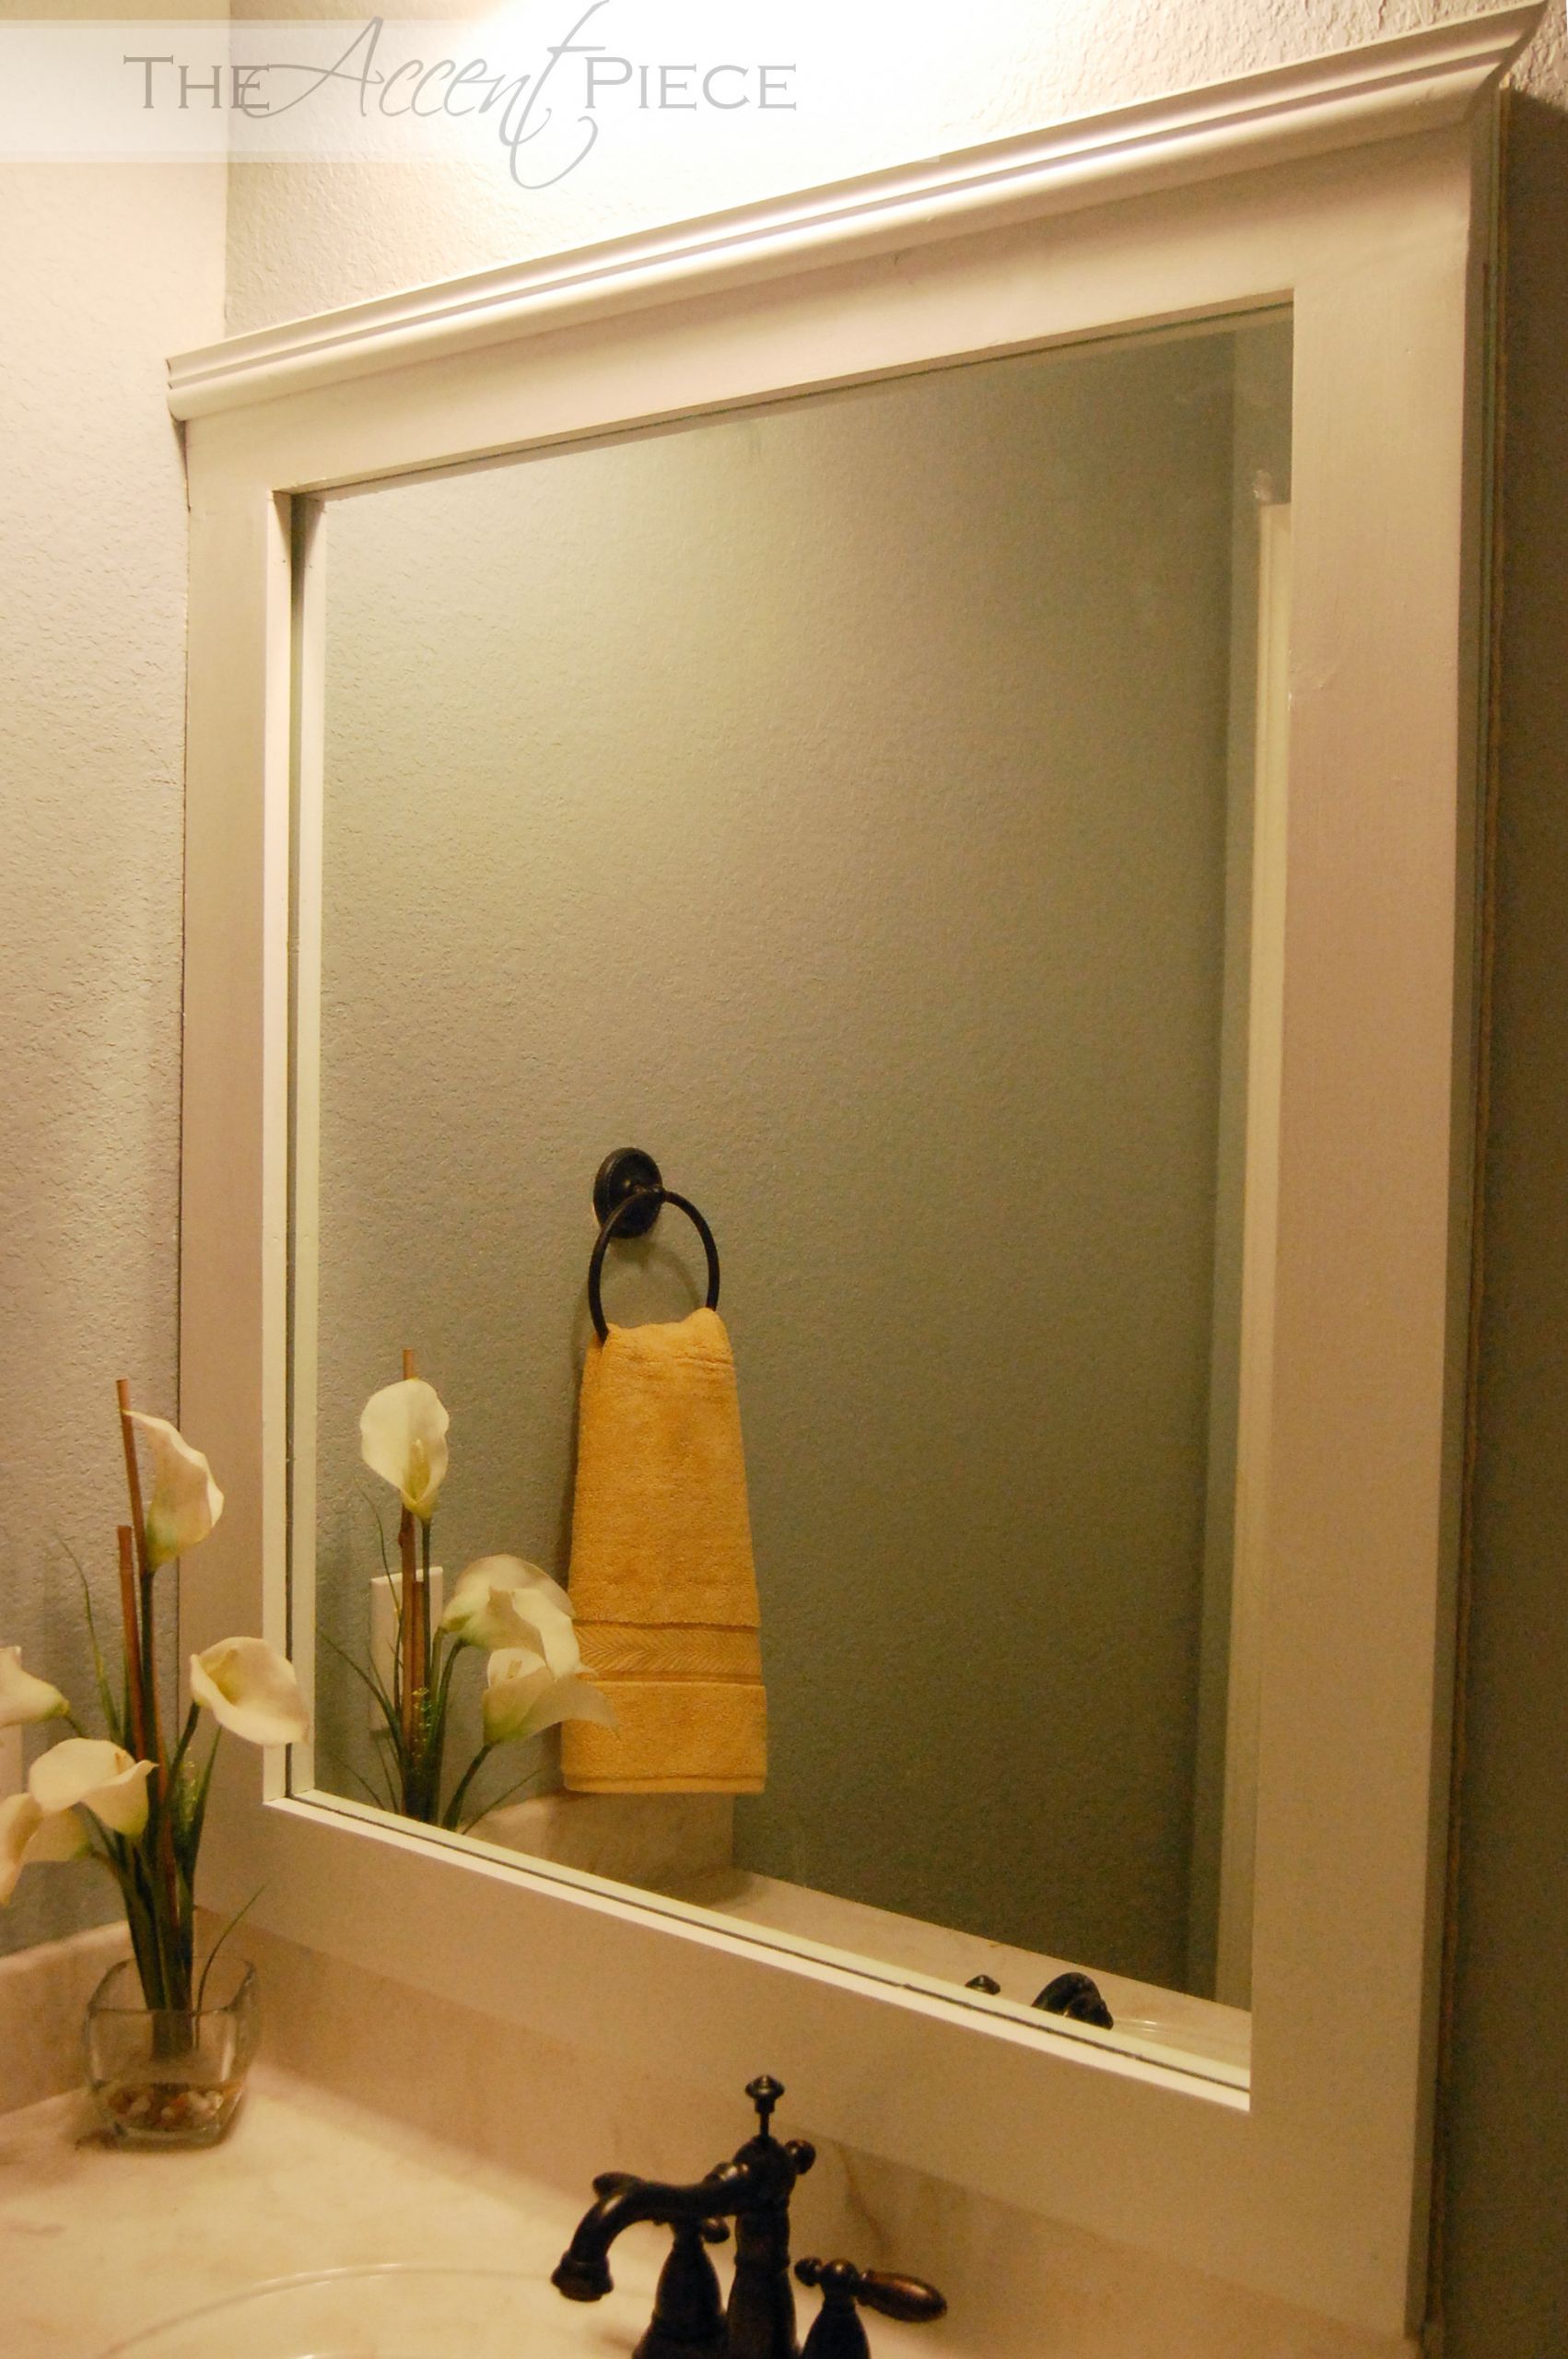 Framed Mirror In Bathroom
 DIY Framed Bathroom Mirror